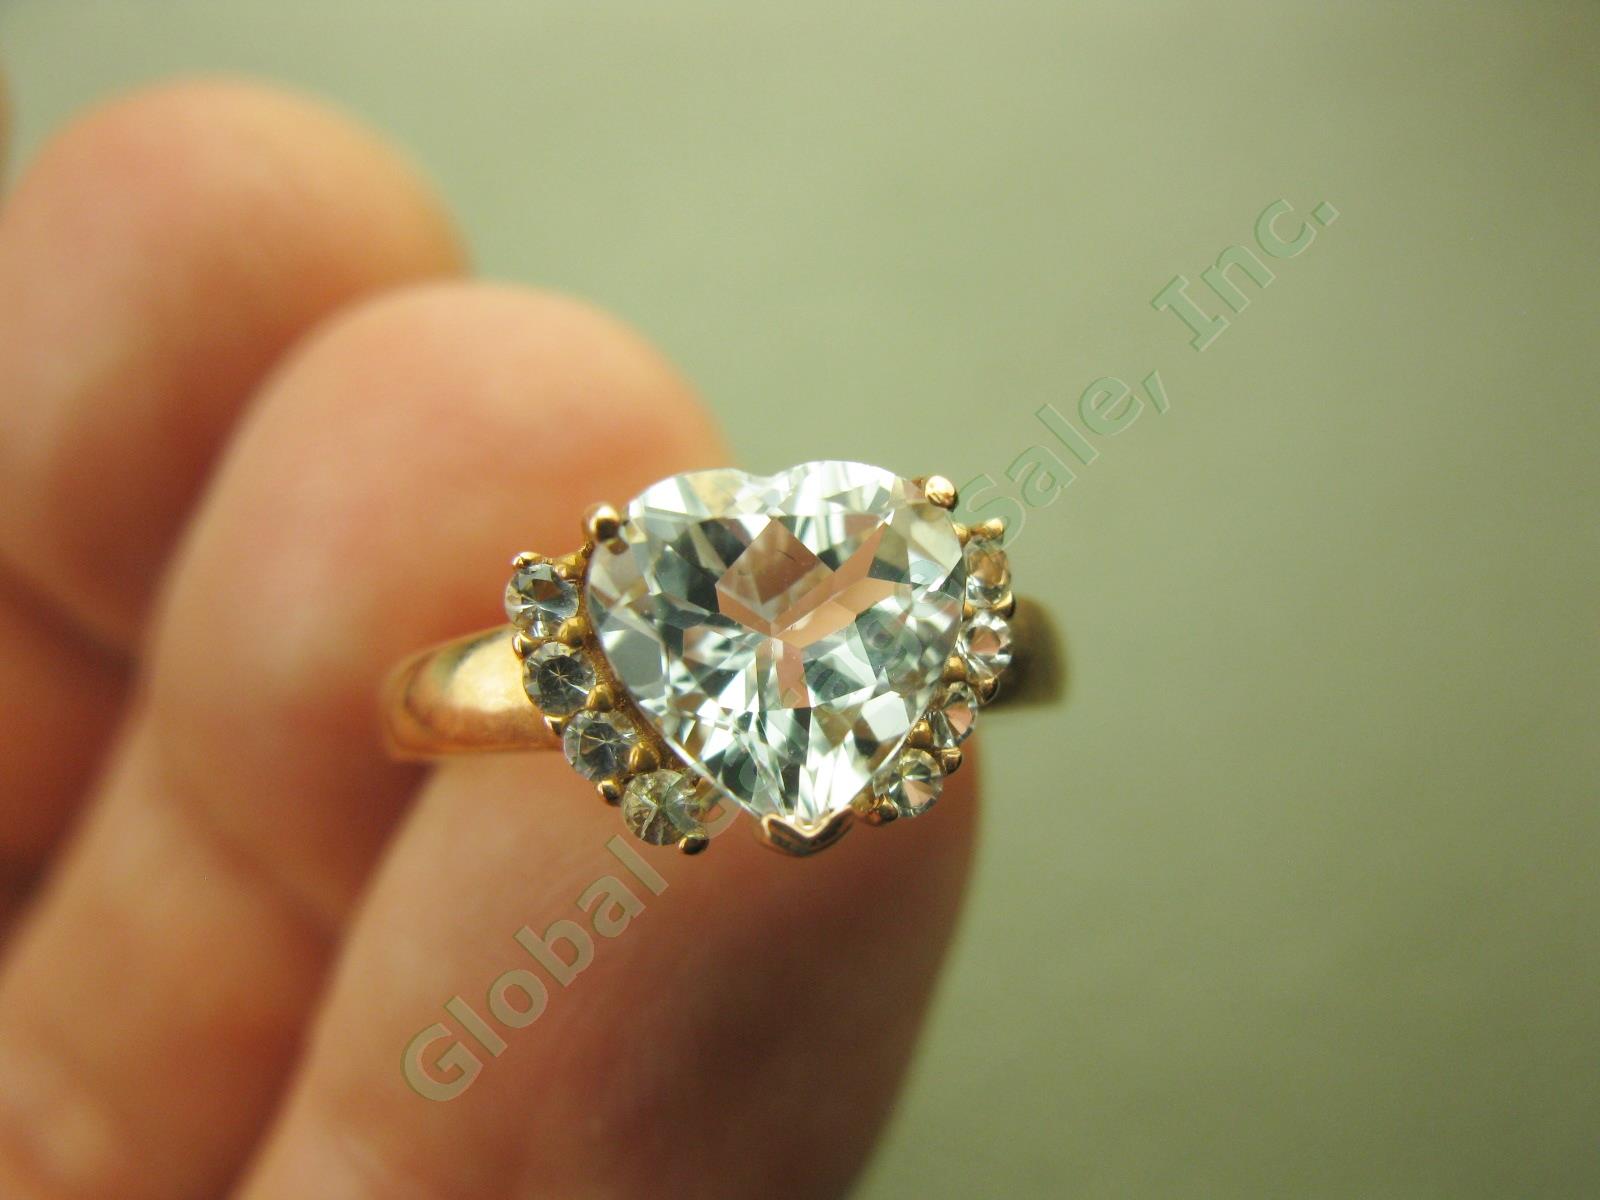 19x 14k 10k Gold Gemstone Rings Lot Earrings 57.7 Grams Not Scrap $1200+ Value!! 4